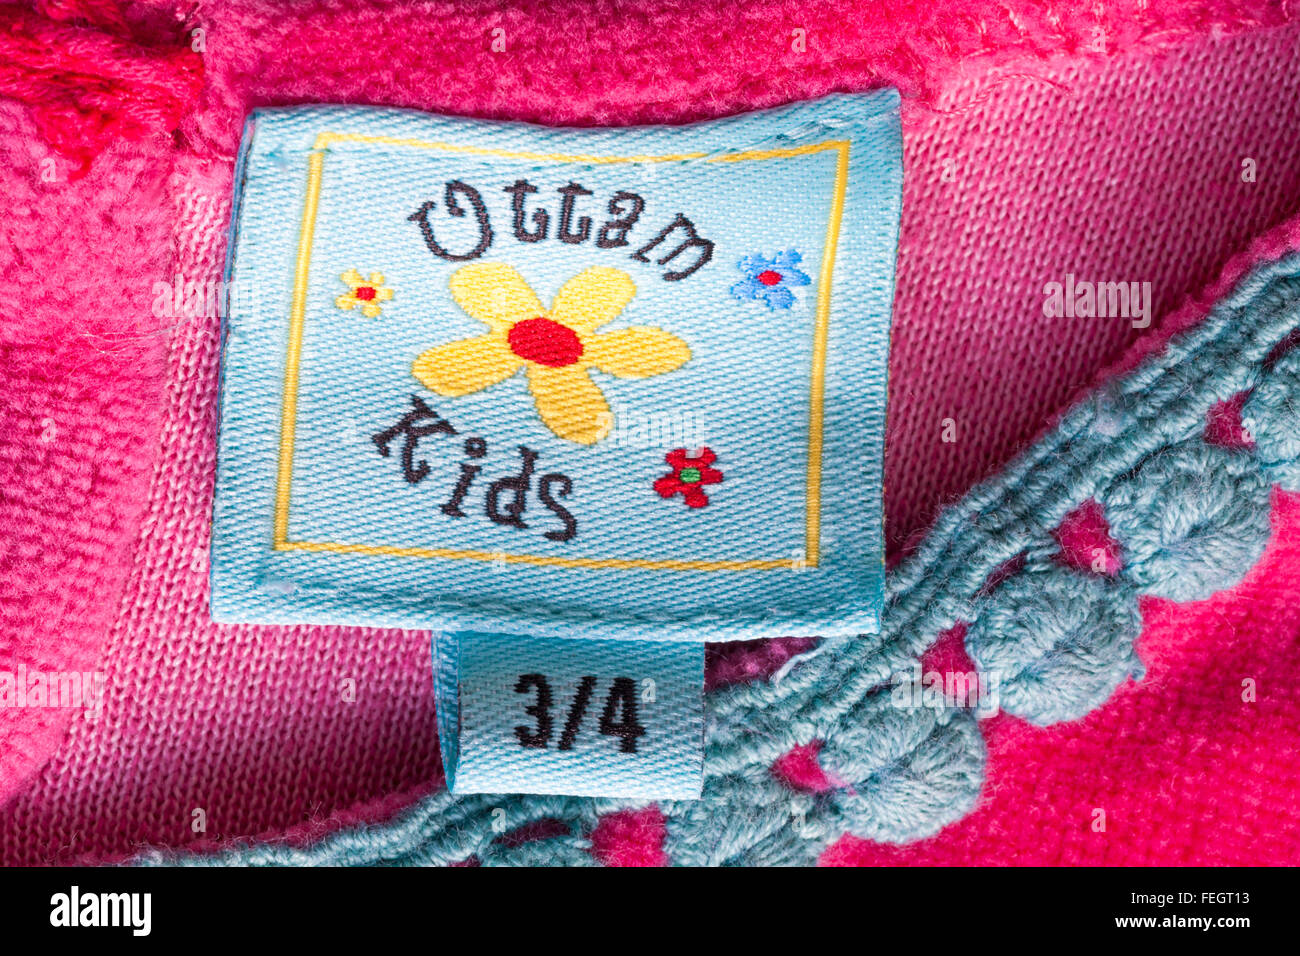 Uttam Kids label in girl's pink dress age 3/4 Stock Photo